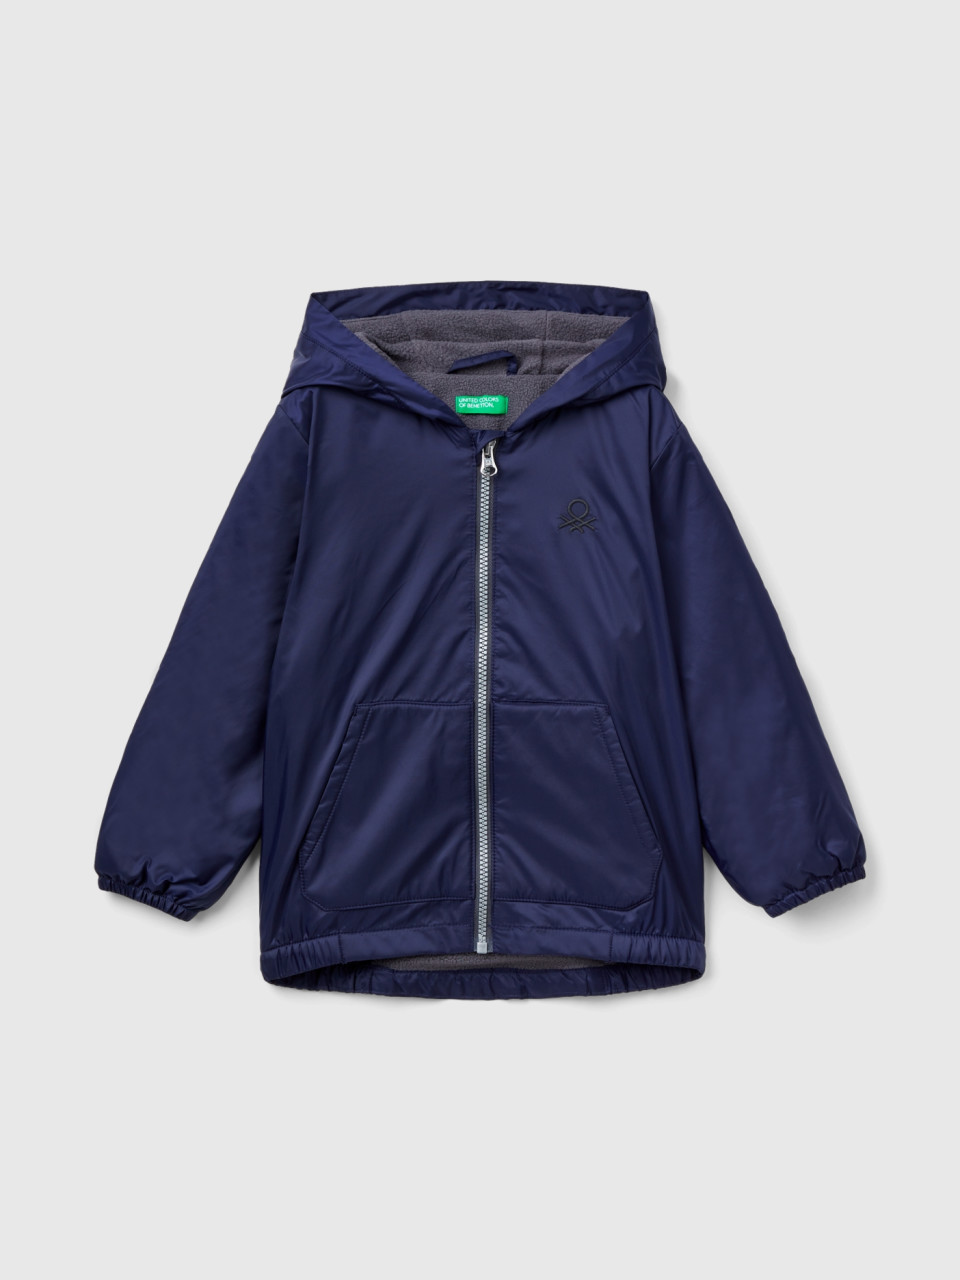 Benetton, Jacket With Oversized Hood, Dark Blue, Kids